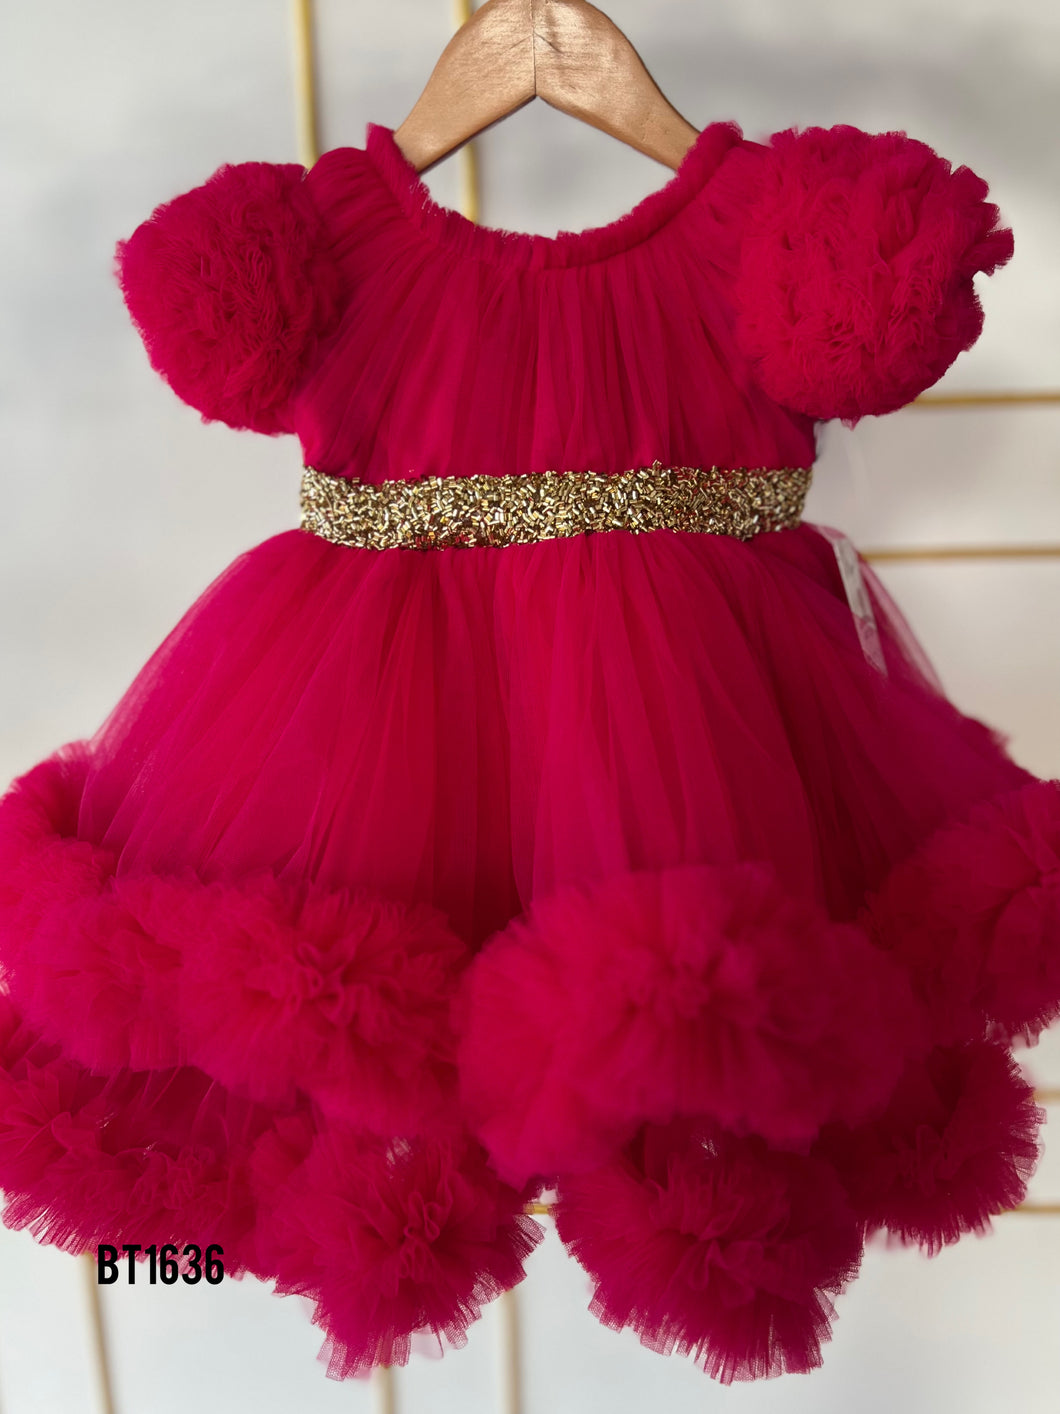 BT1636 Ruby Blossom Celebration Dress - Where Elegance Meets Enchantment